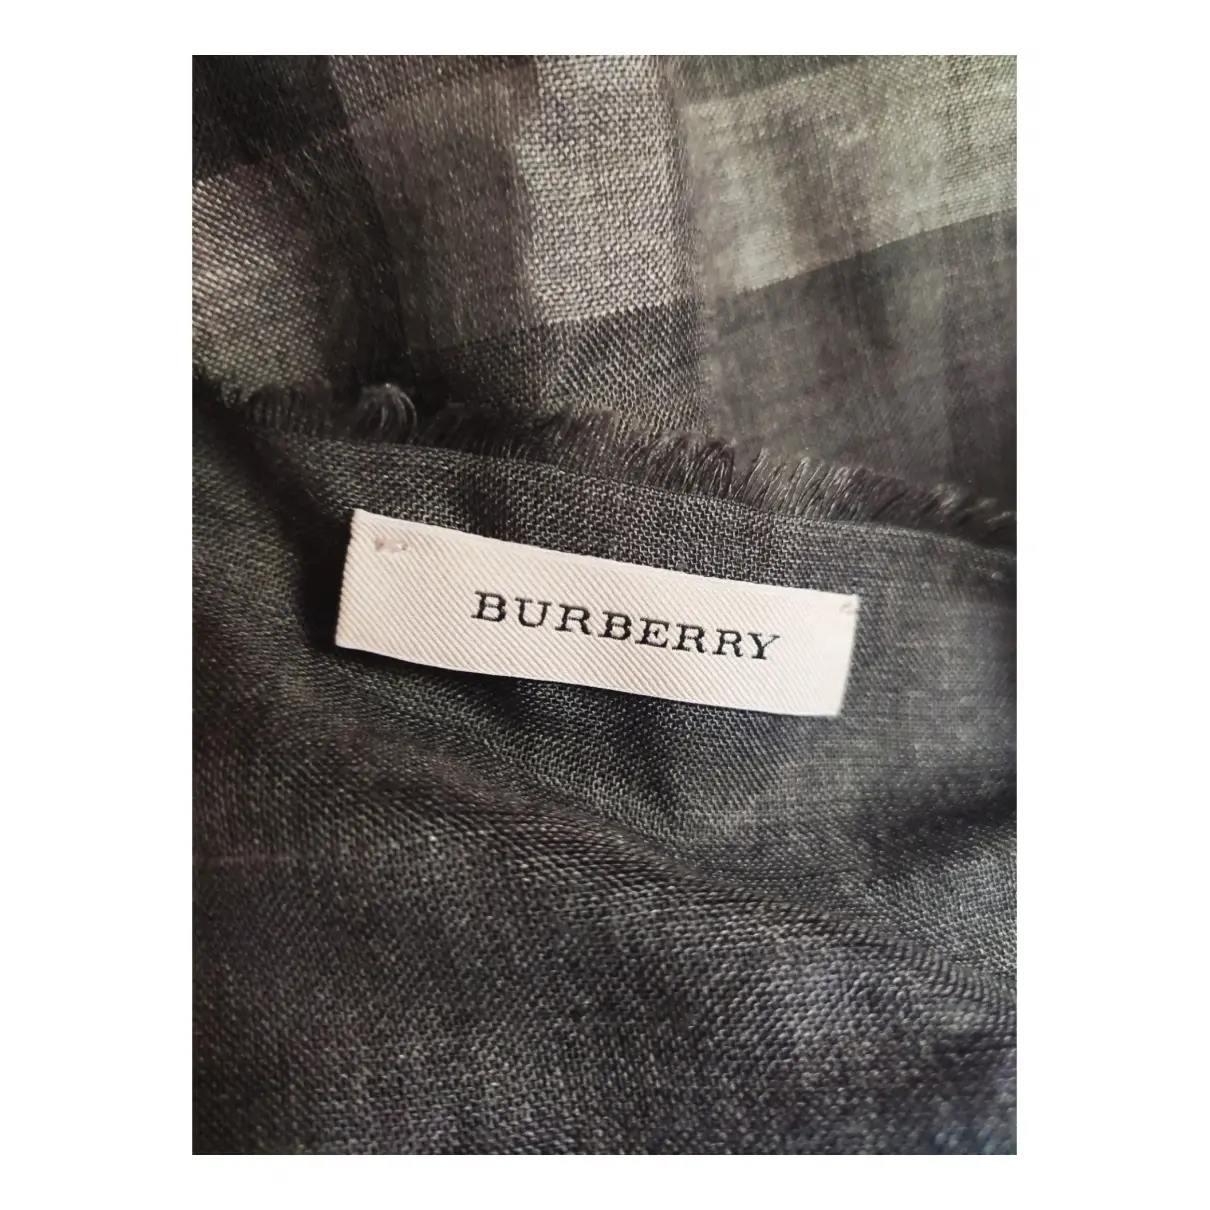 Buy Burberry Wool stole online